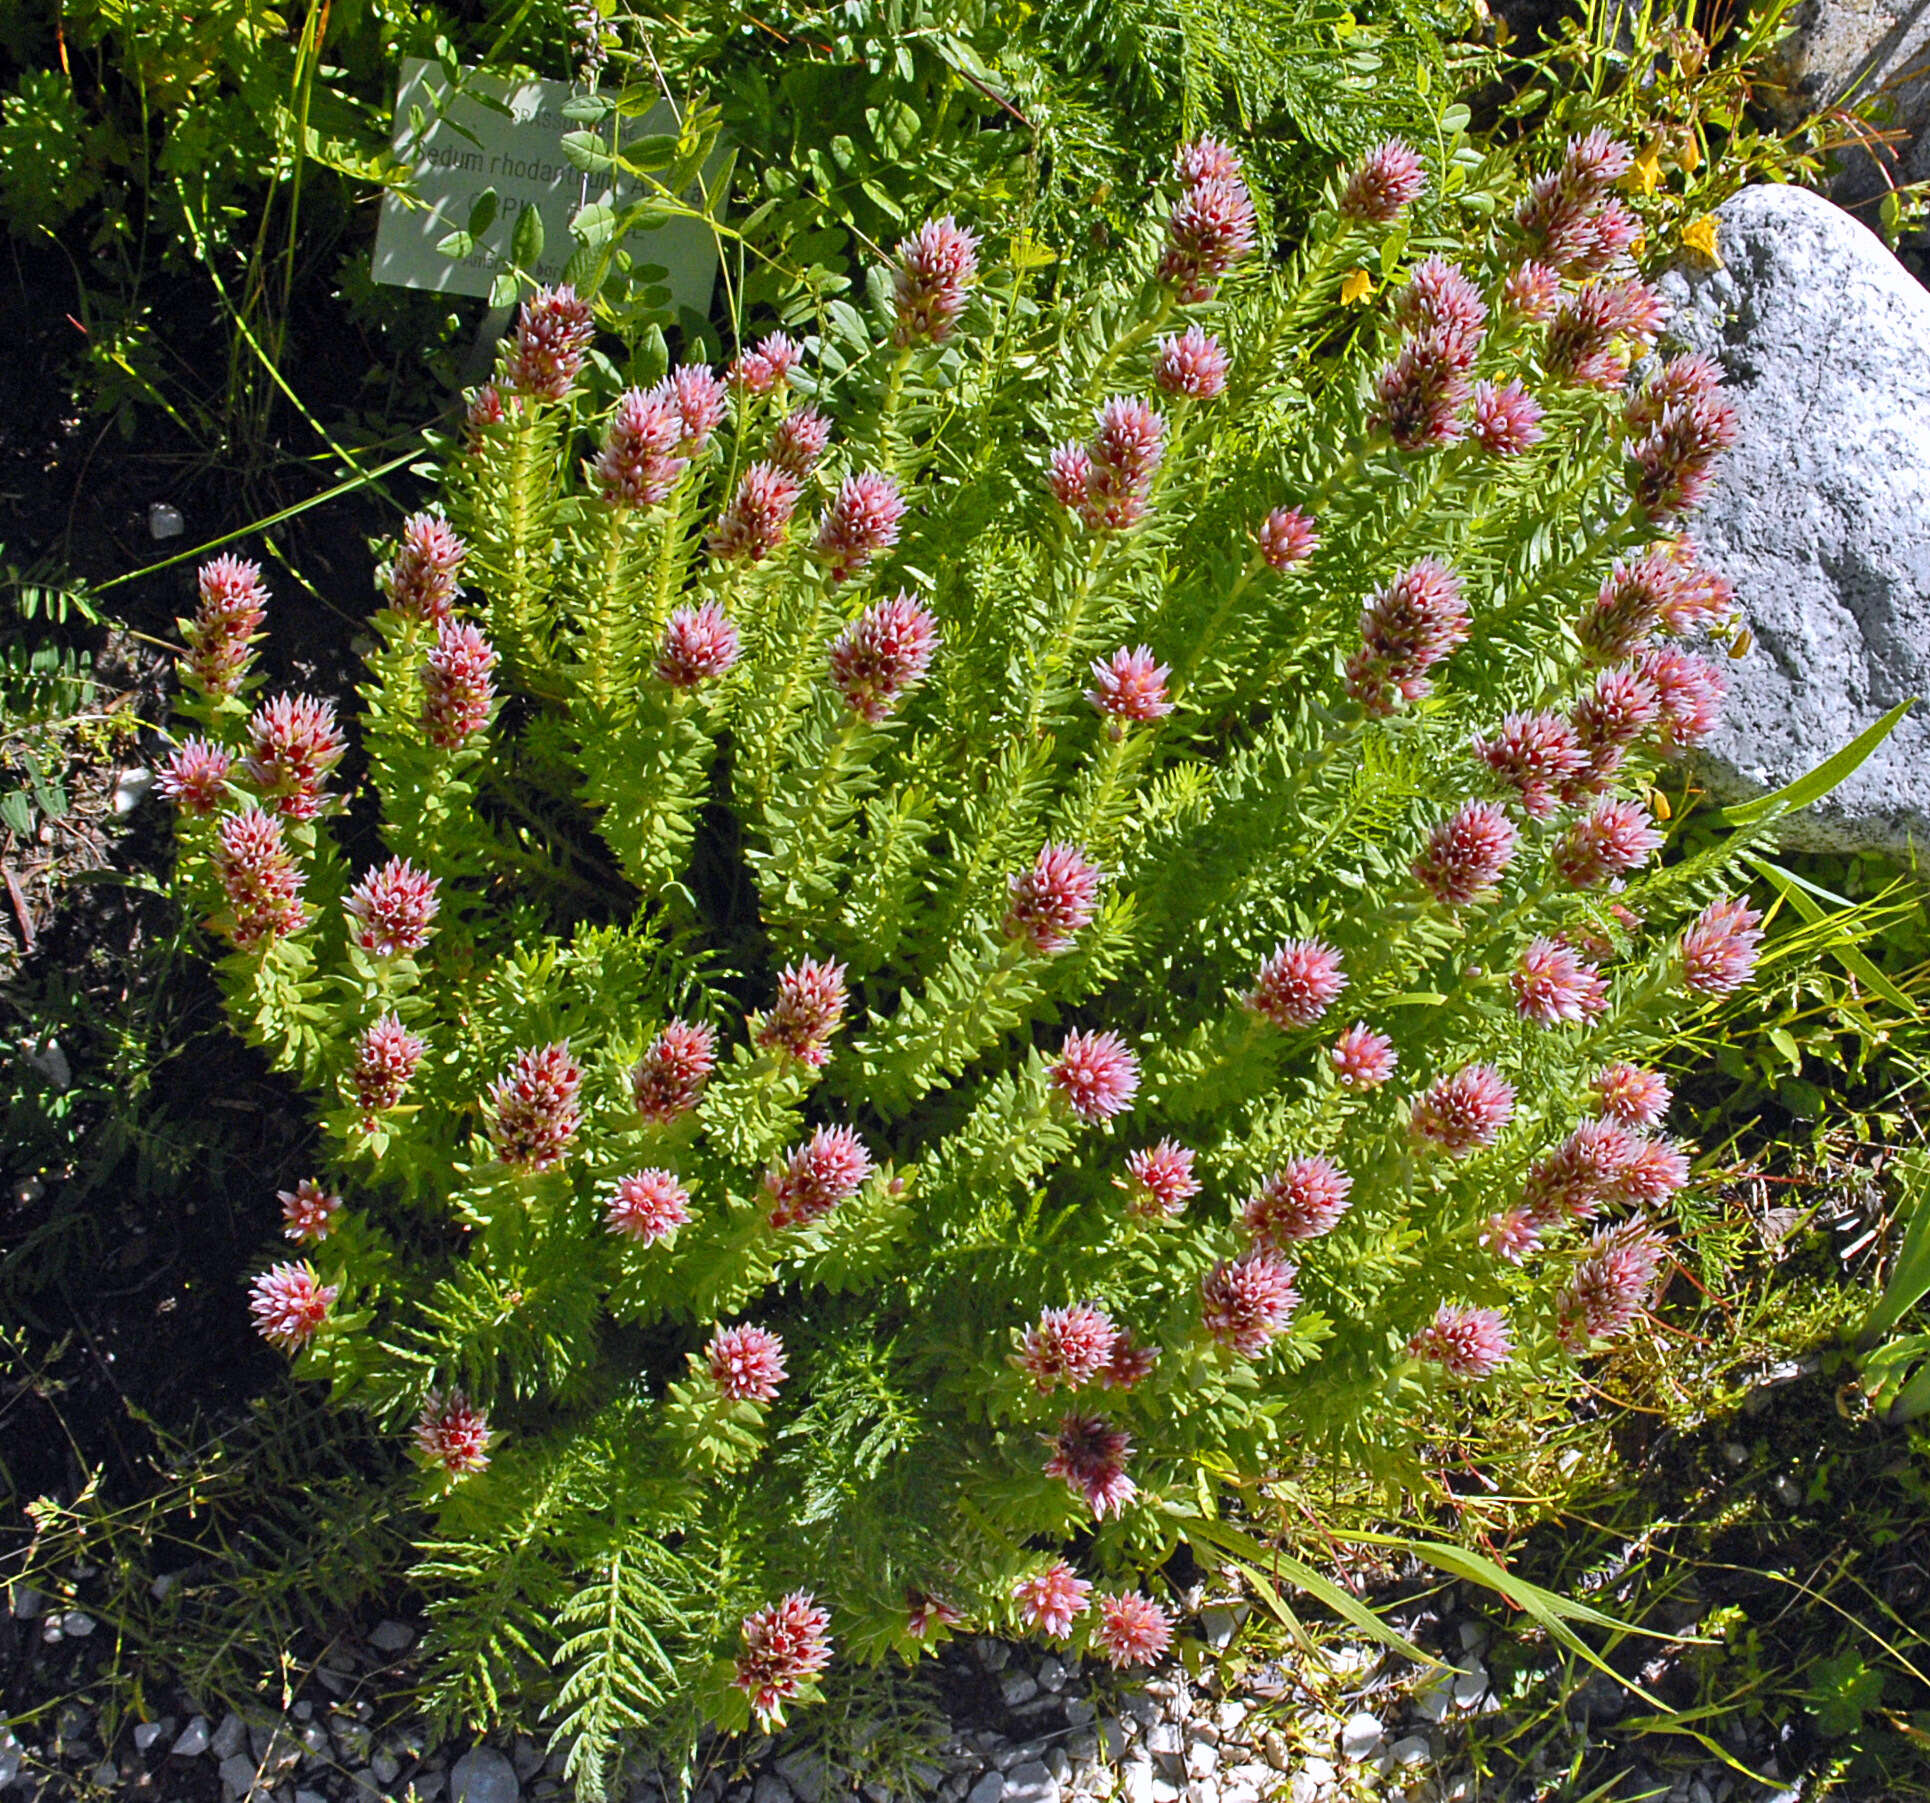 Image of redpod stonecrop